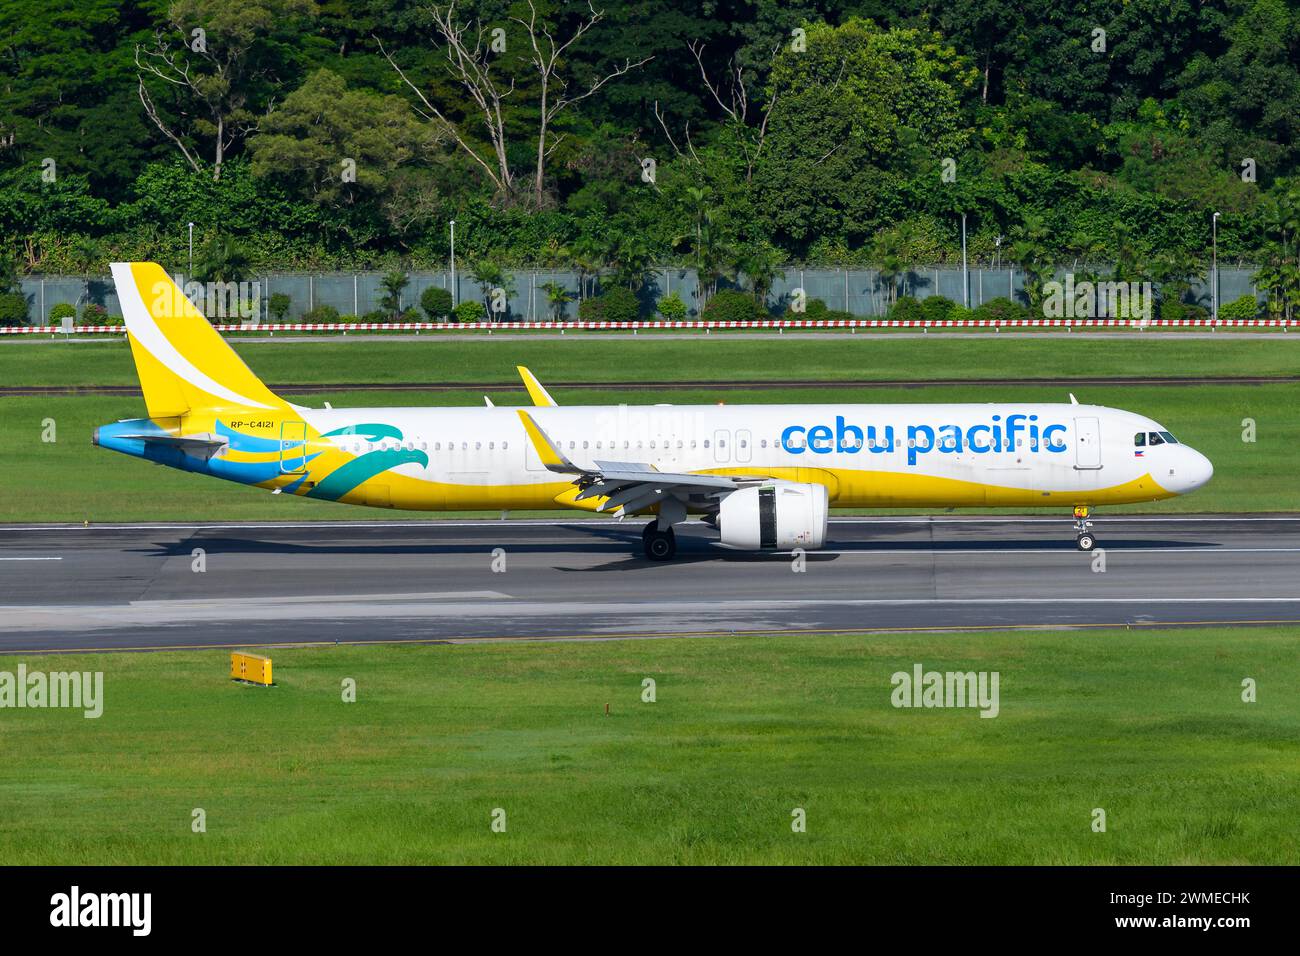 Cebu Pacific Airbus A321 aircraft landing. Plane of Cebu Air Pacific model A321neo. Cebu airline airplane. Stock Photo